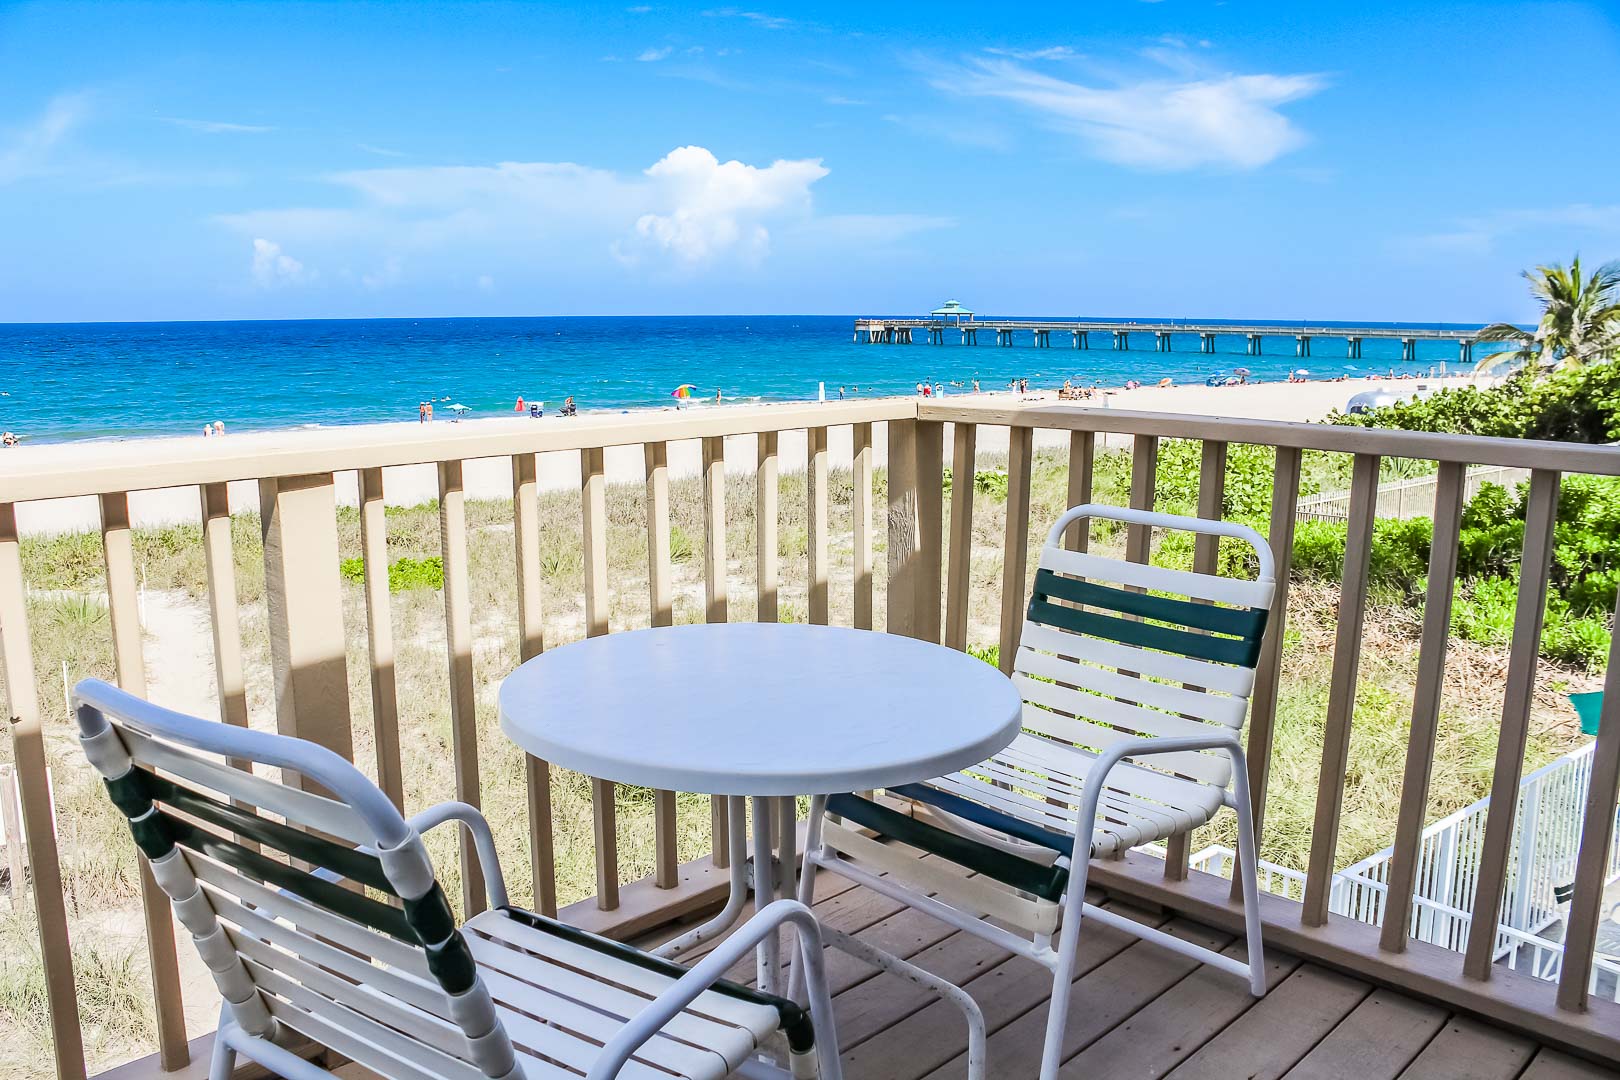 A refreshing balcony view at VRI's Berkshire Beach Club in Florida